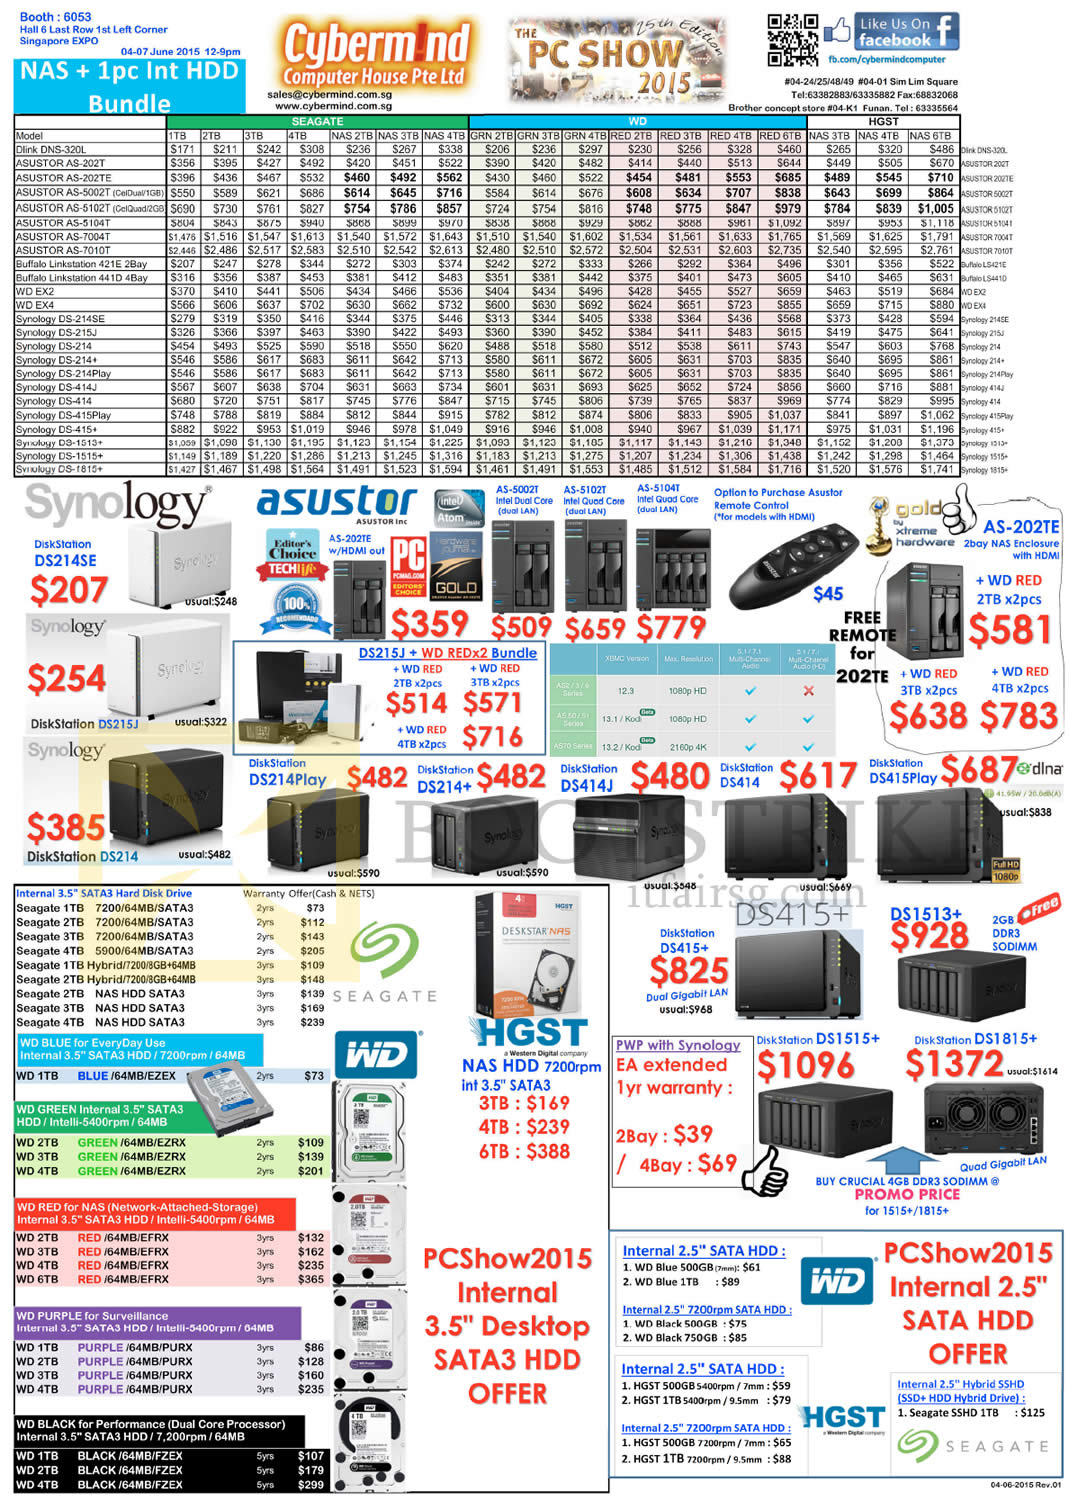 PC SHOW 2015 price list image brochure of Cybermind NAS D-Link ASUSTor WD Synology, Internal Hard Disk, Synology, Green, Blue, Red, Purple, Black, DiskStation